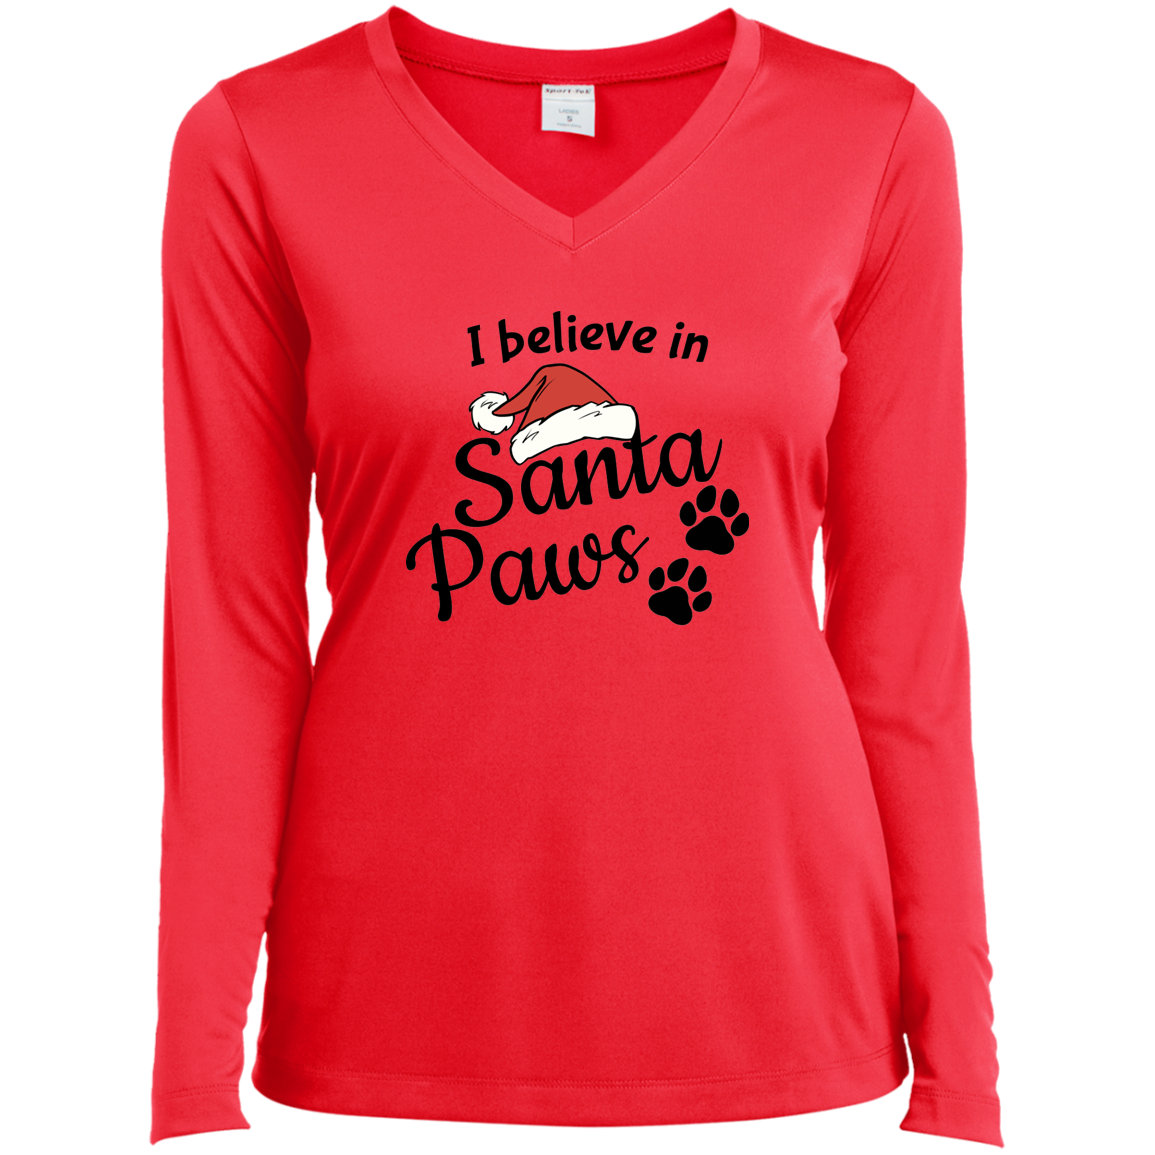 I Believe in Santa Paws - Ladies Long Sleeve V-Neck